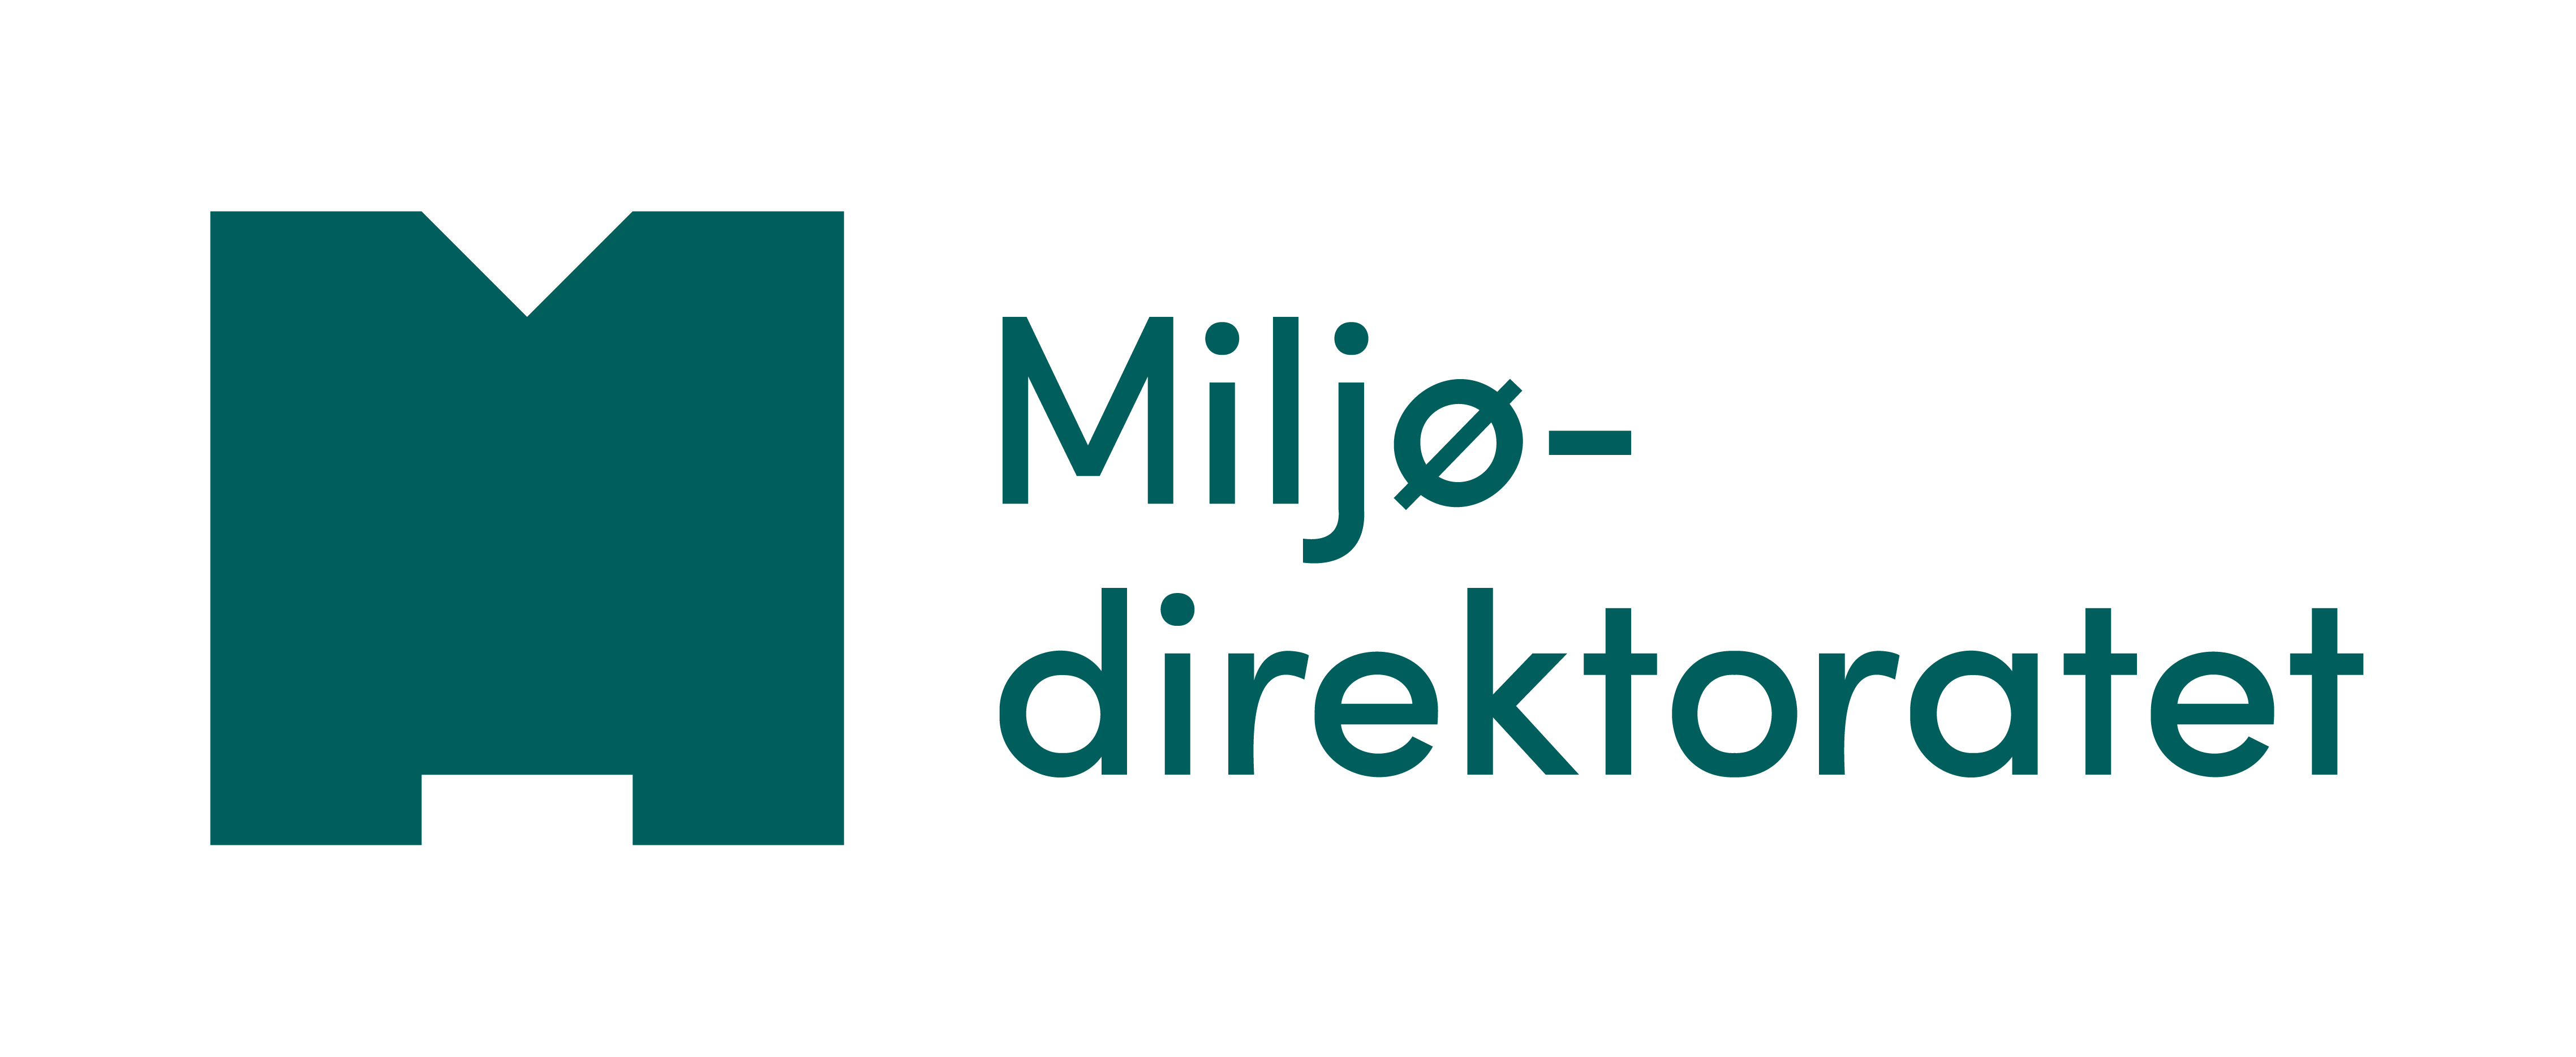 Miljodirektoratet logo